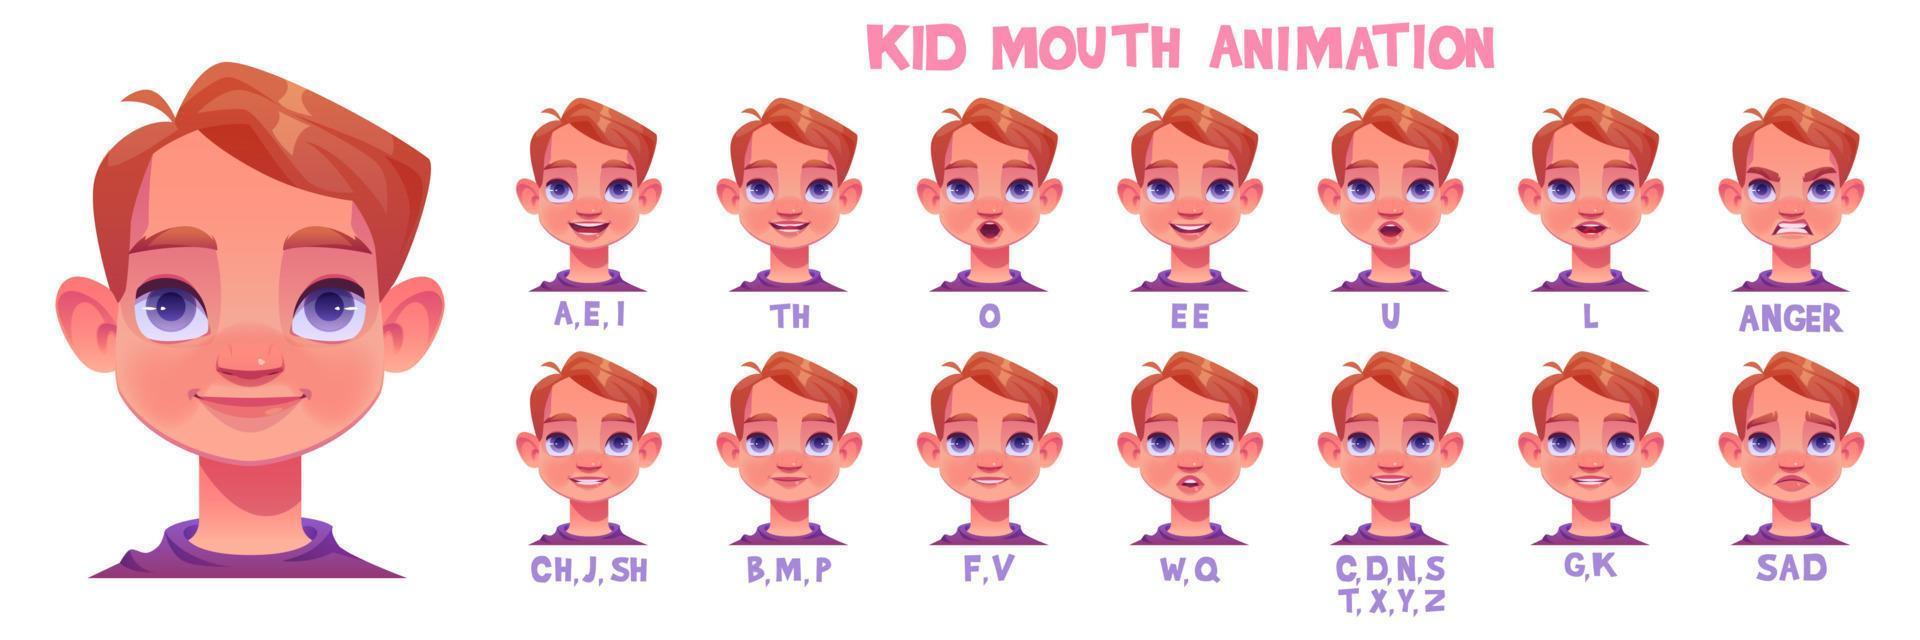 Boy mouth animation, expression, pronunciation vector